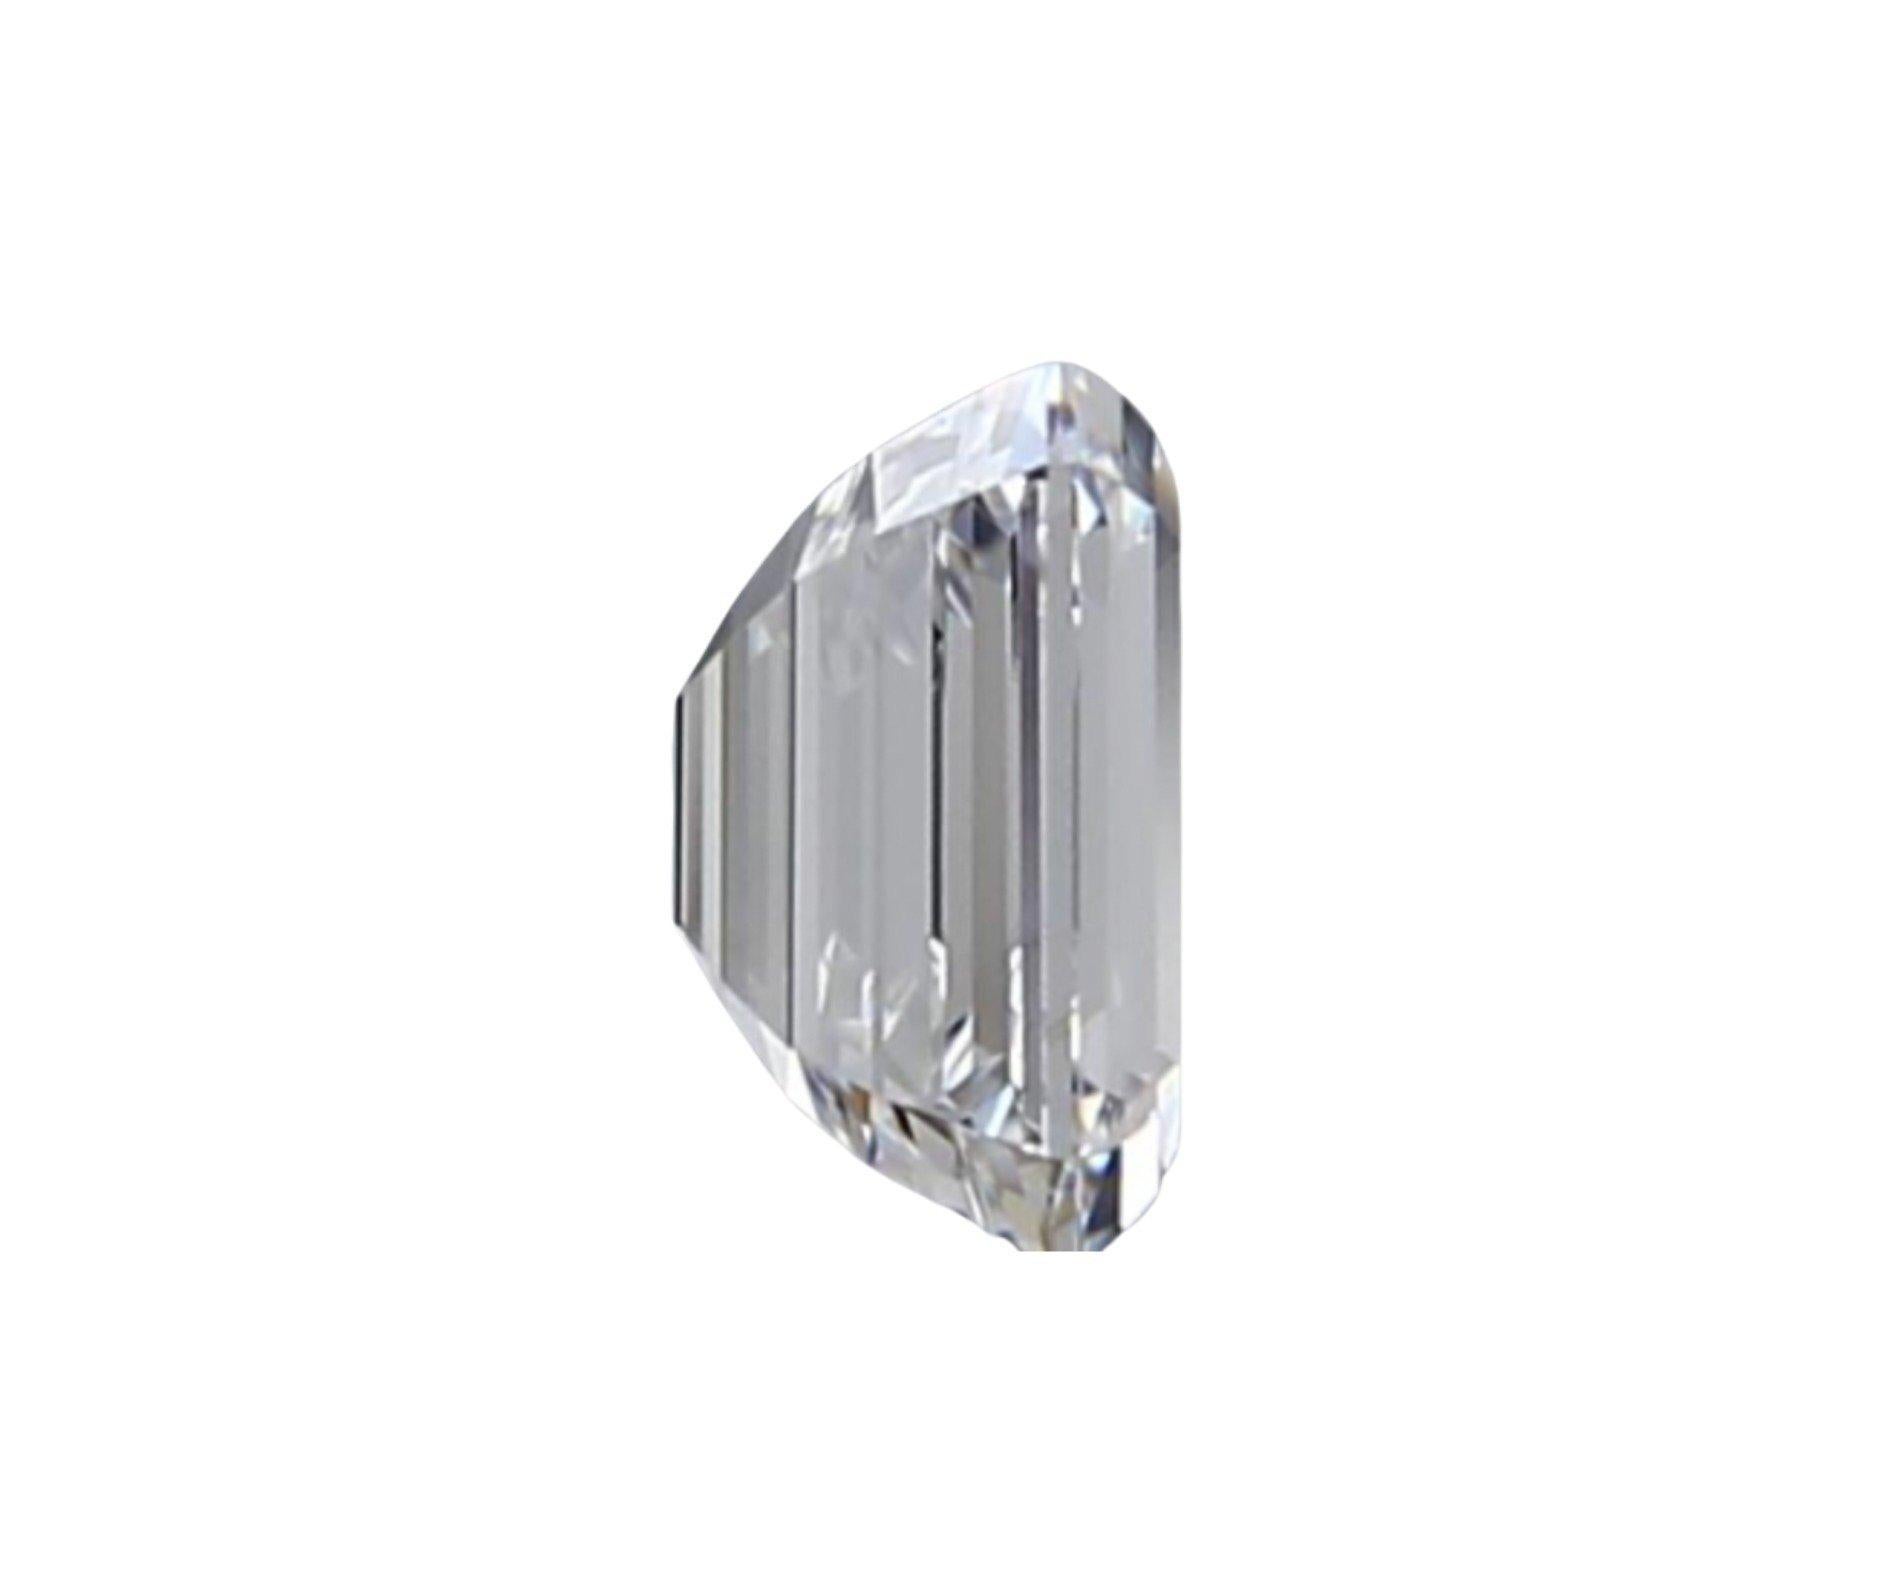 Stunning 1 pc Natural Diamonds 0.52 ct  Emerald F IF (flawless) GIA Certificate 2